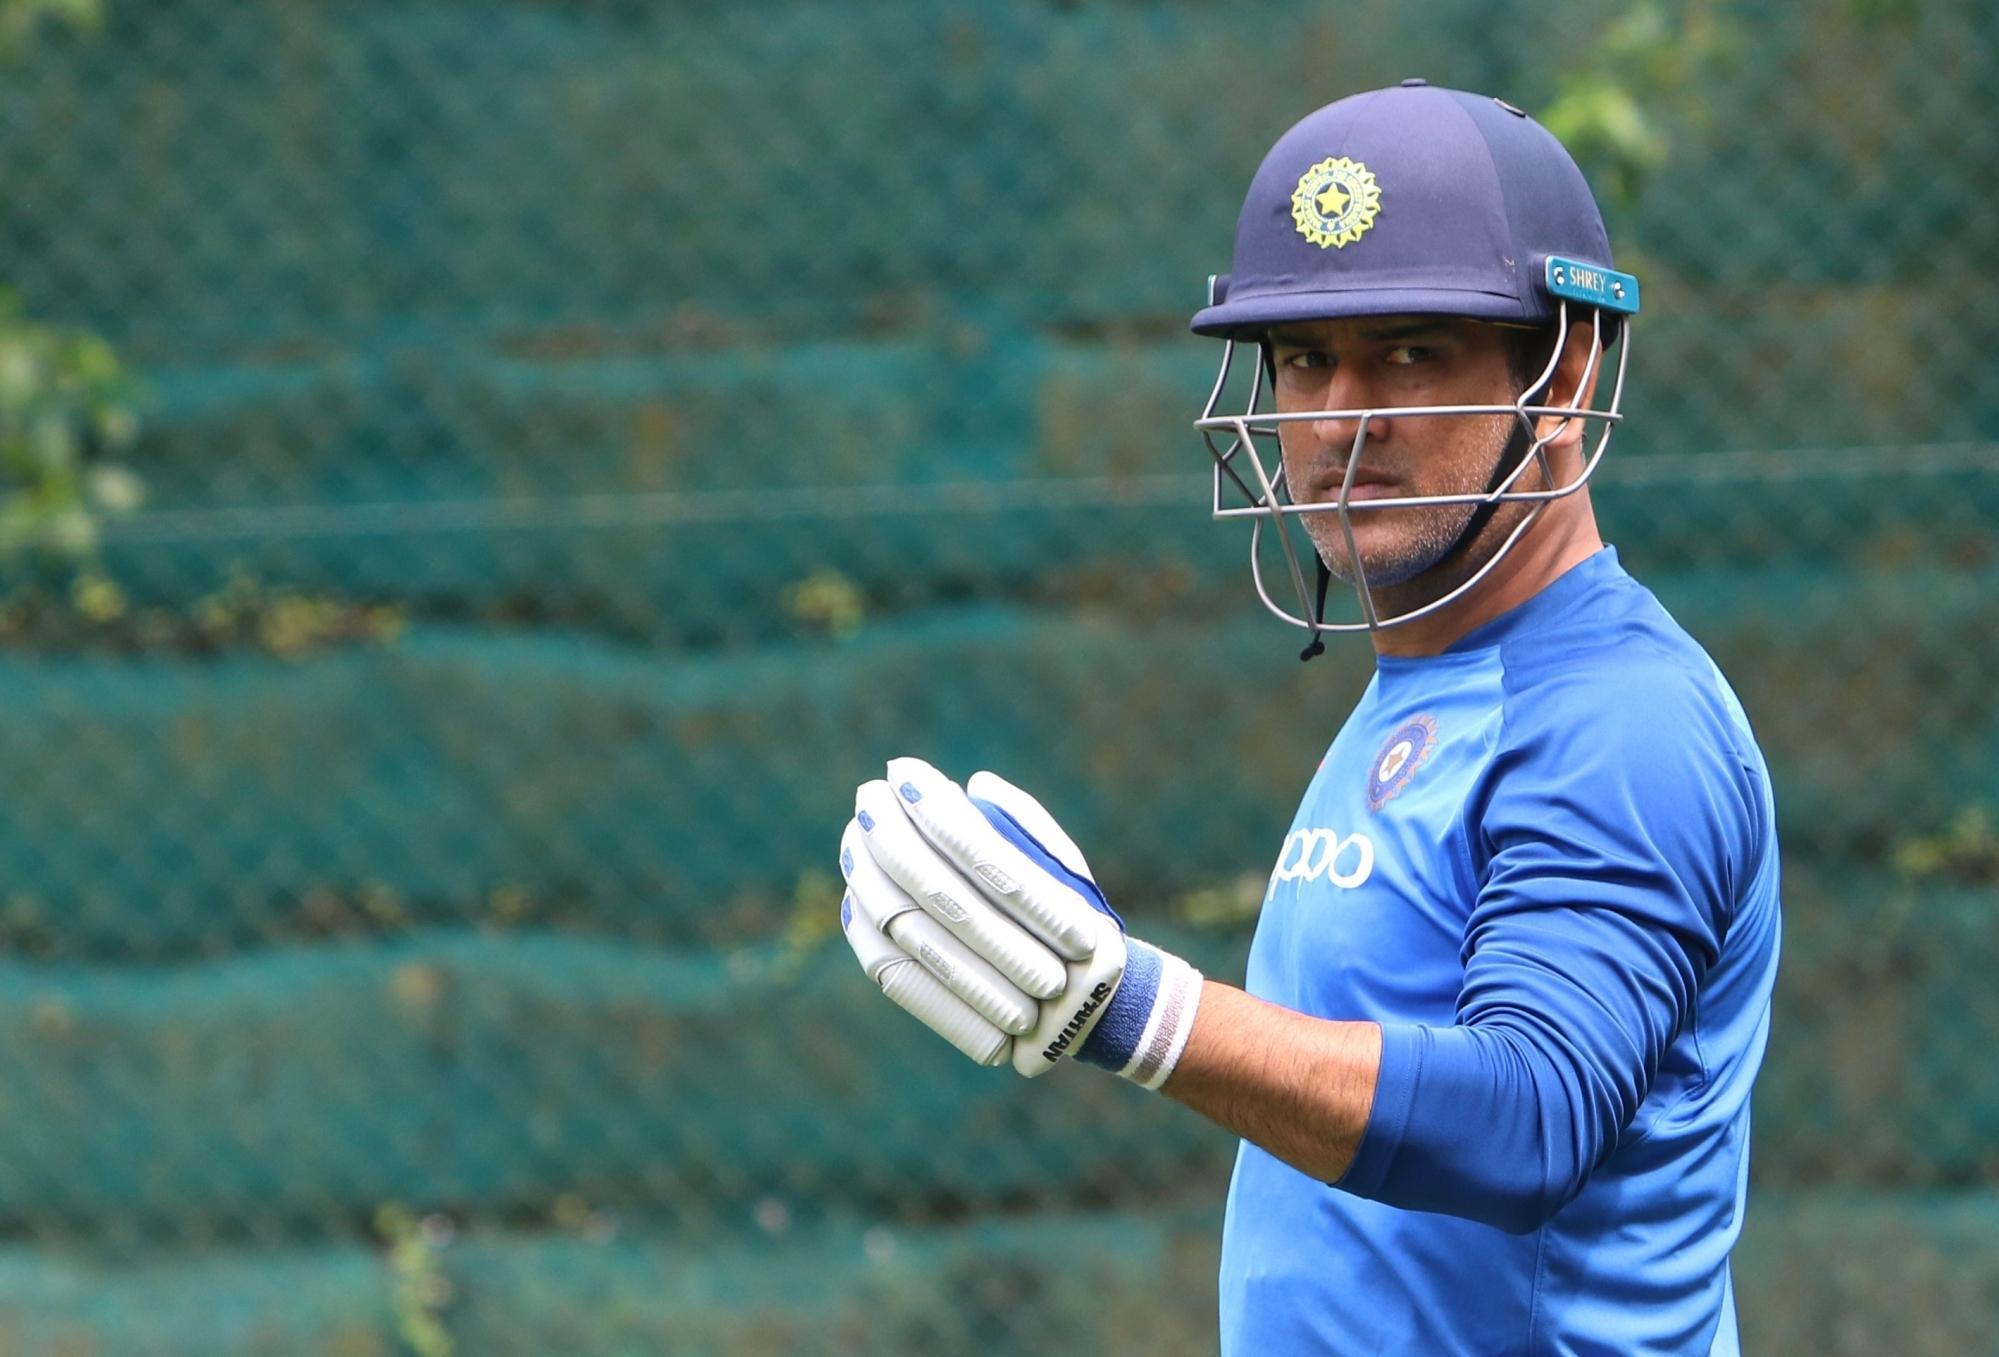 Dhoni rises in latest ICC ODI rankings for batsmen